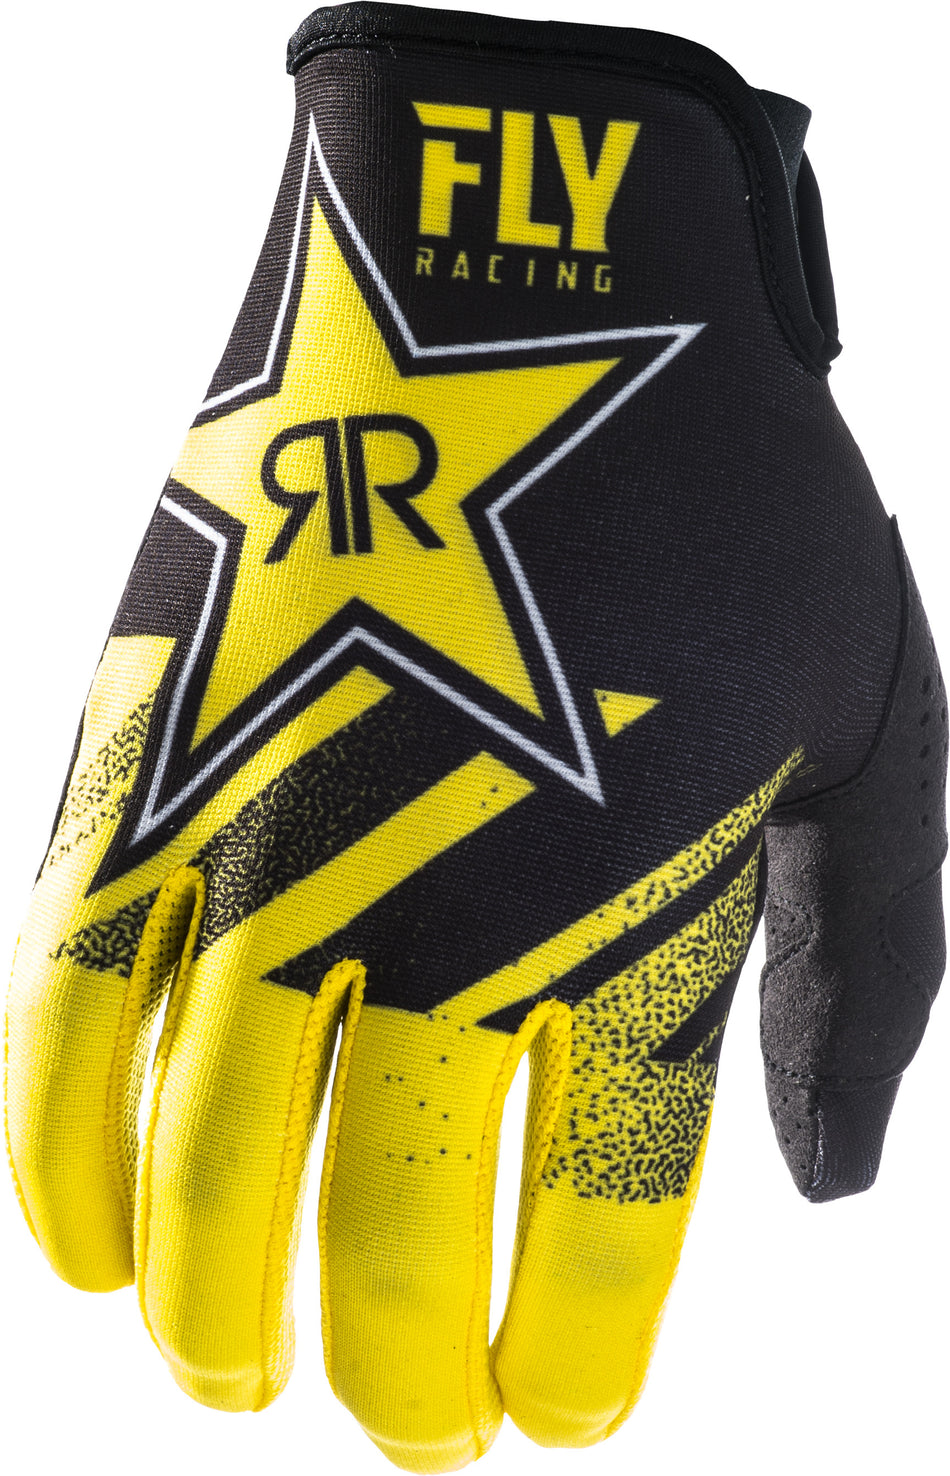 FLY RACING Lite Hydrogen Rockstar Gloves Yellow/Black Sz 13 372-01813